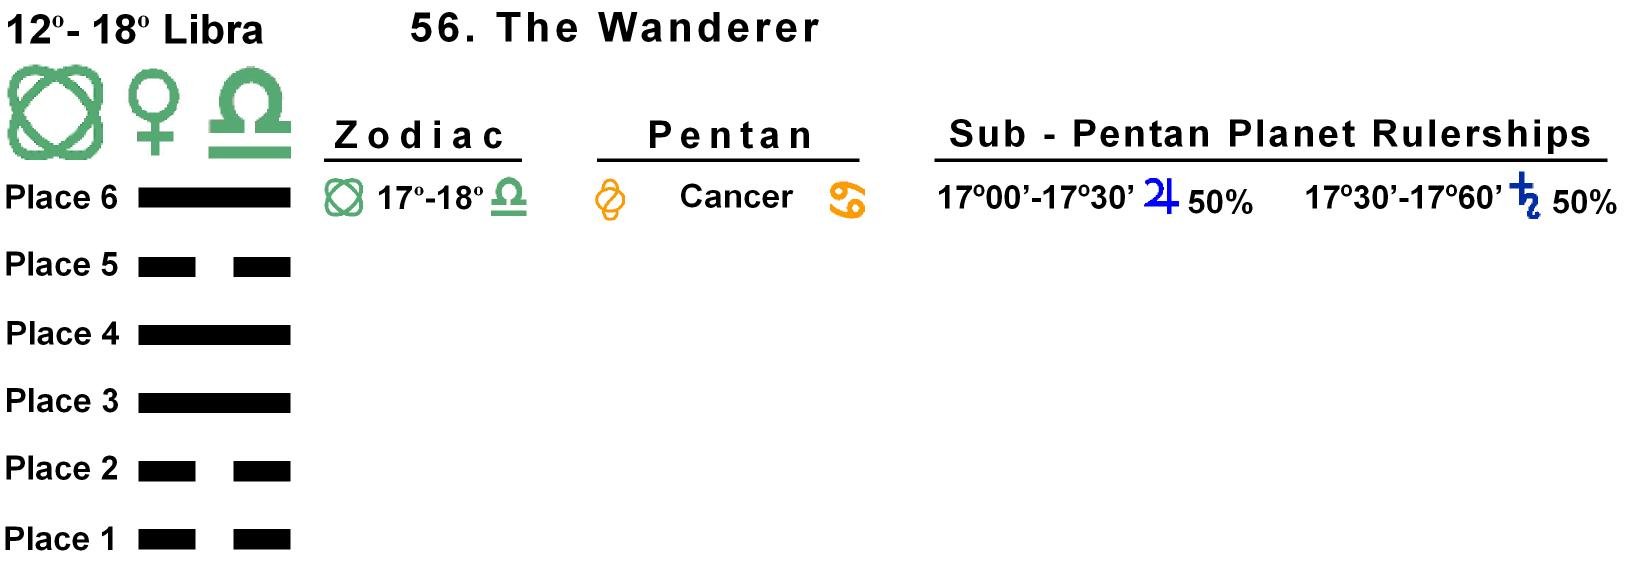 Pent-lines-07LI 17-18 Hx-56 The Wanderer